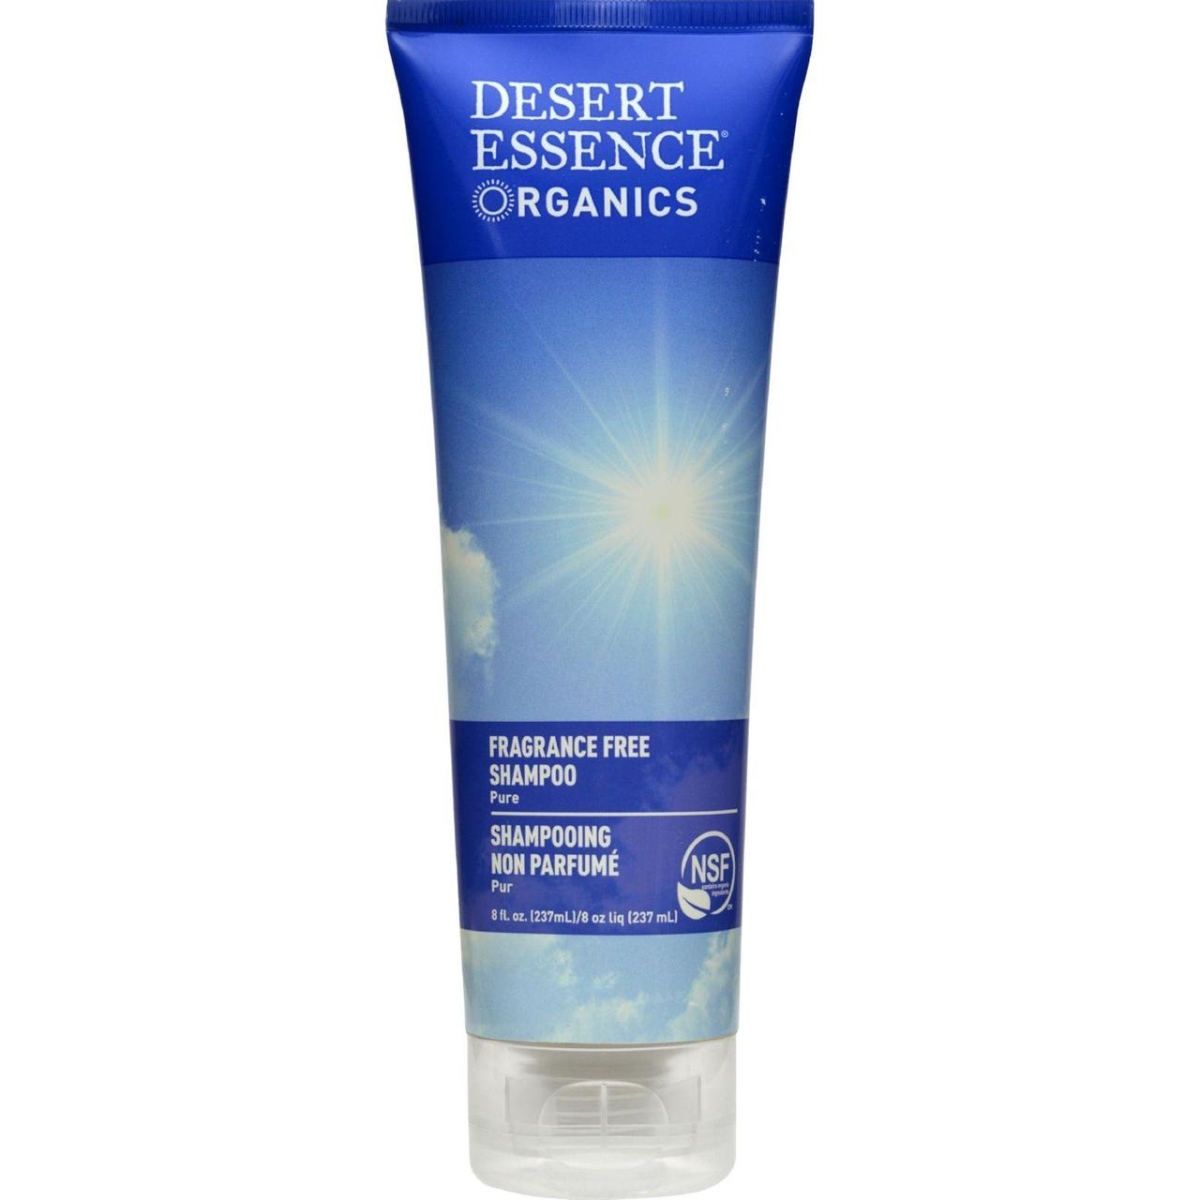 Hg0428409 8 Fl Oz Pure Shampoo Fragrance Free